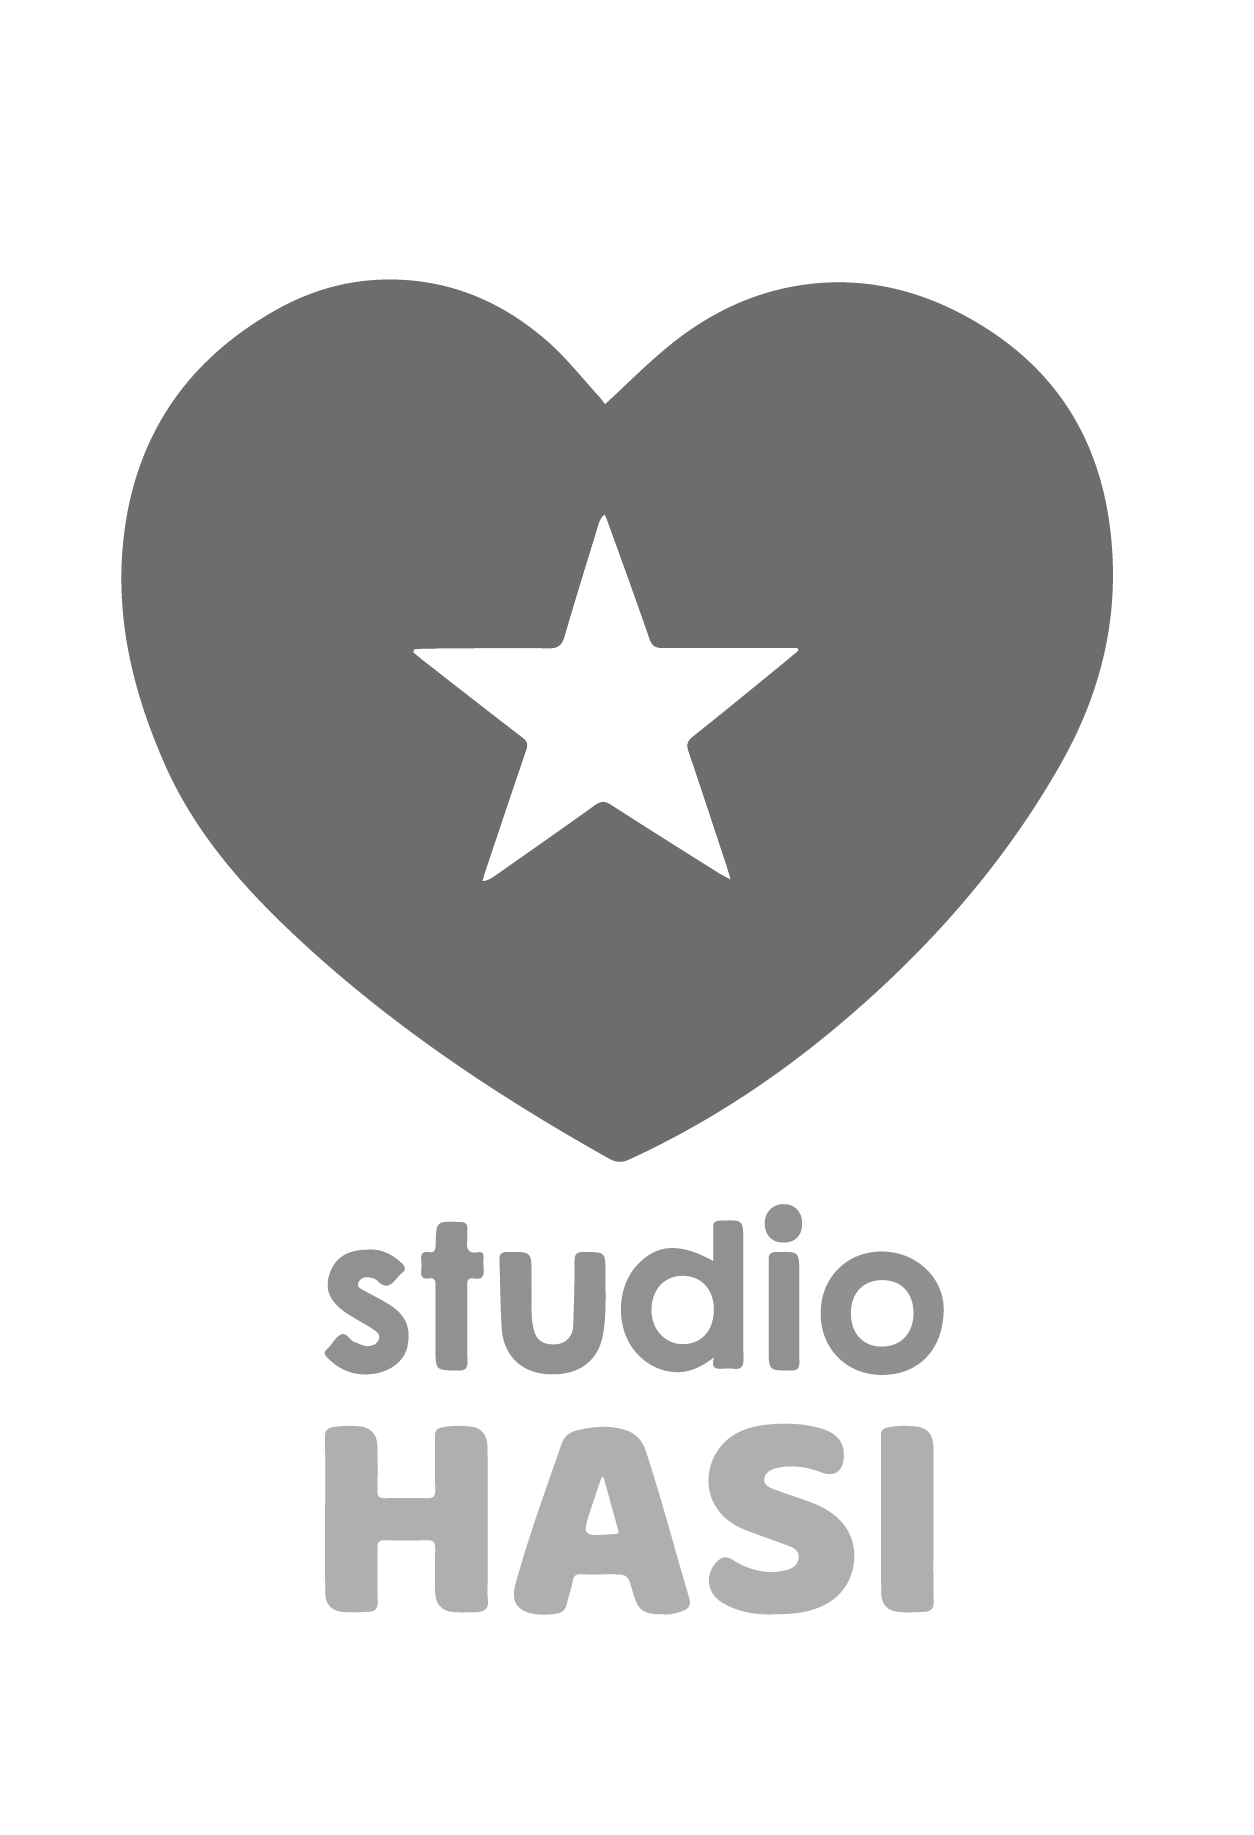 Studio Hasi Logo